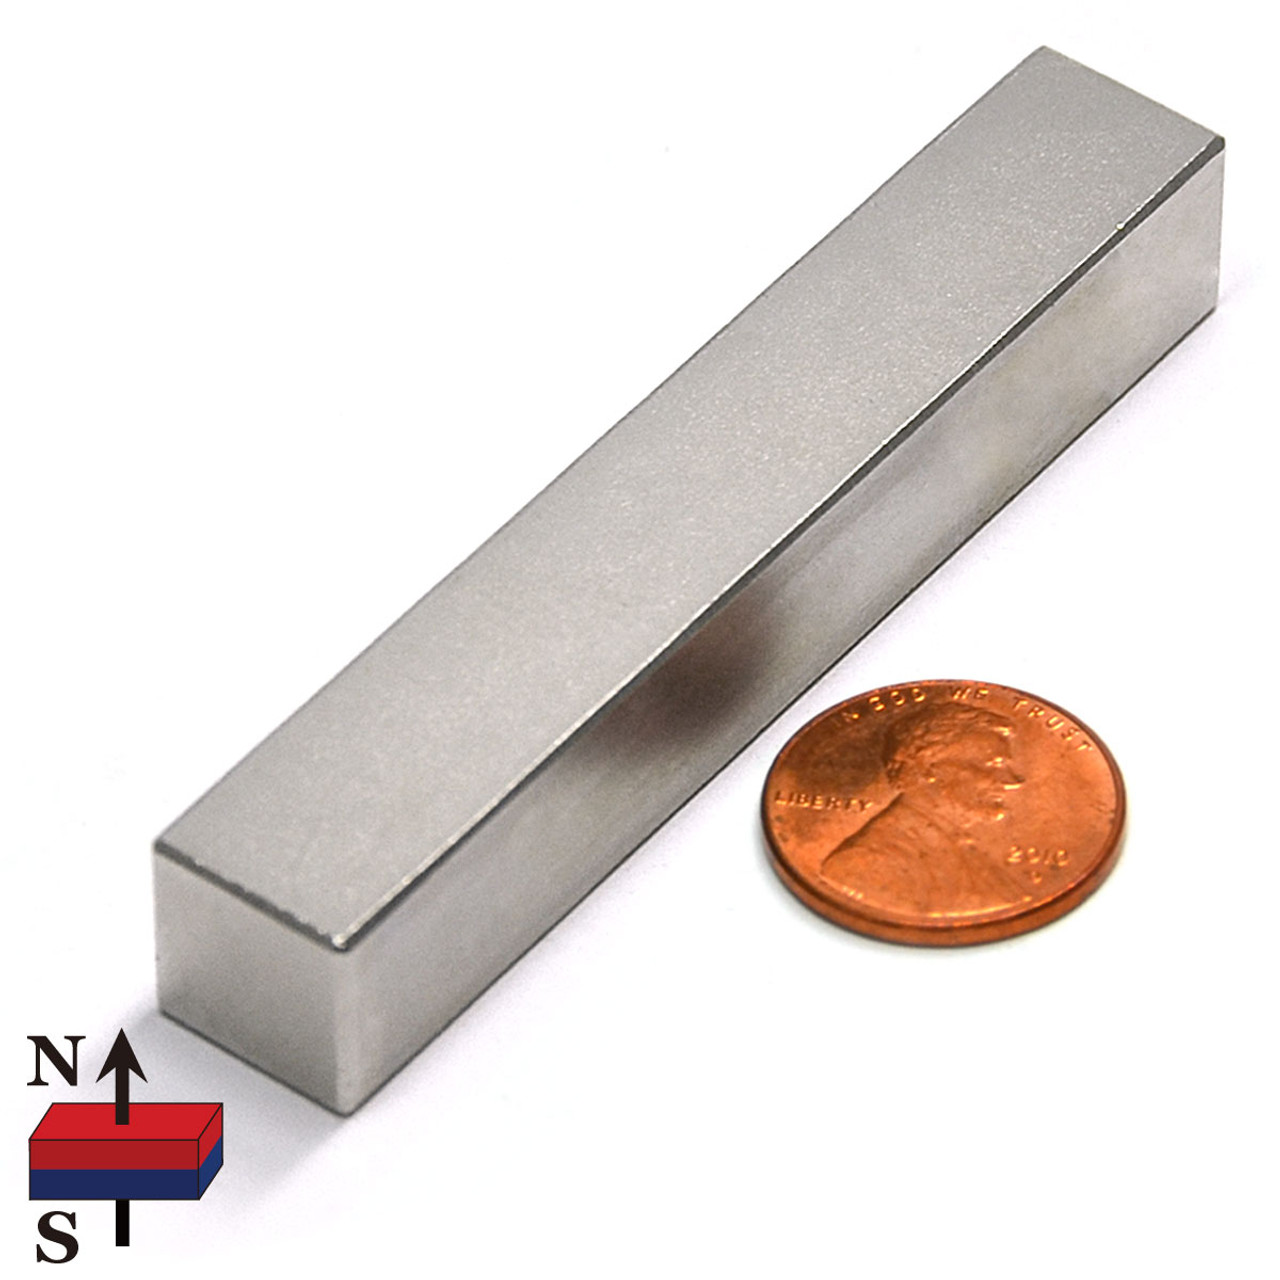 10 x Neodymium Rectangular Magnets Super Strong Rare Earth Block NdFeb N52 Grade 